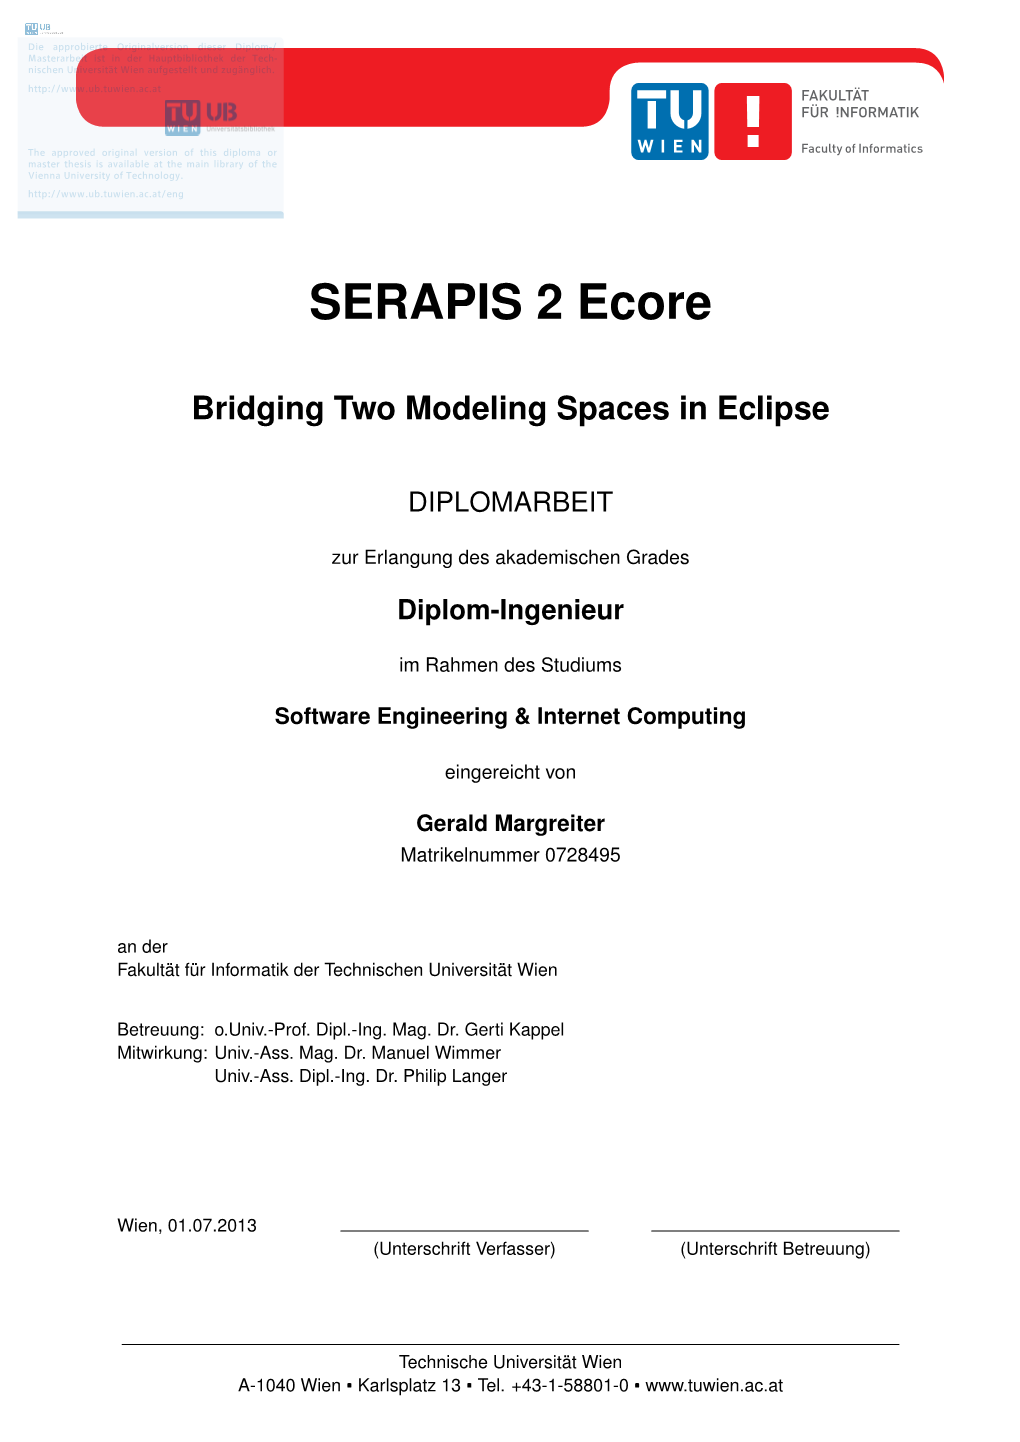 SERAPIS 2 Ecore